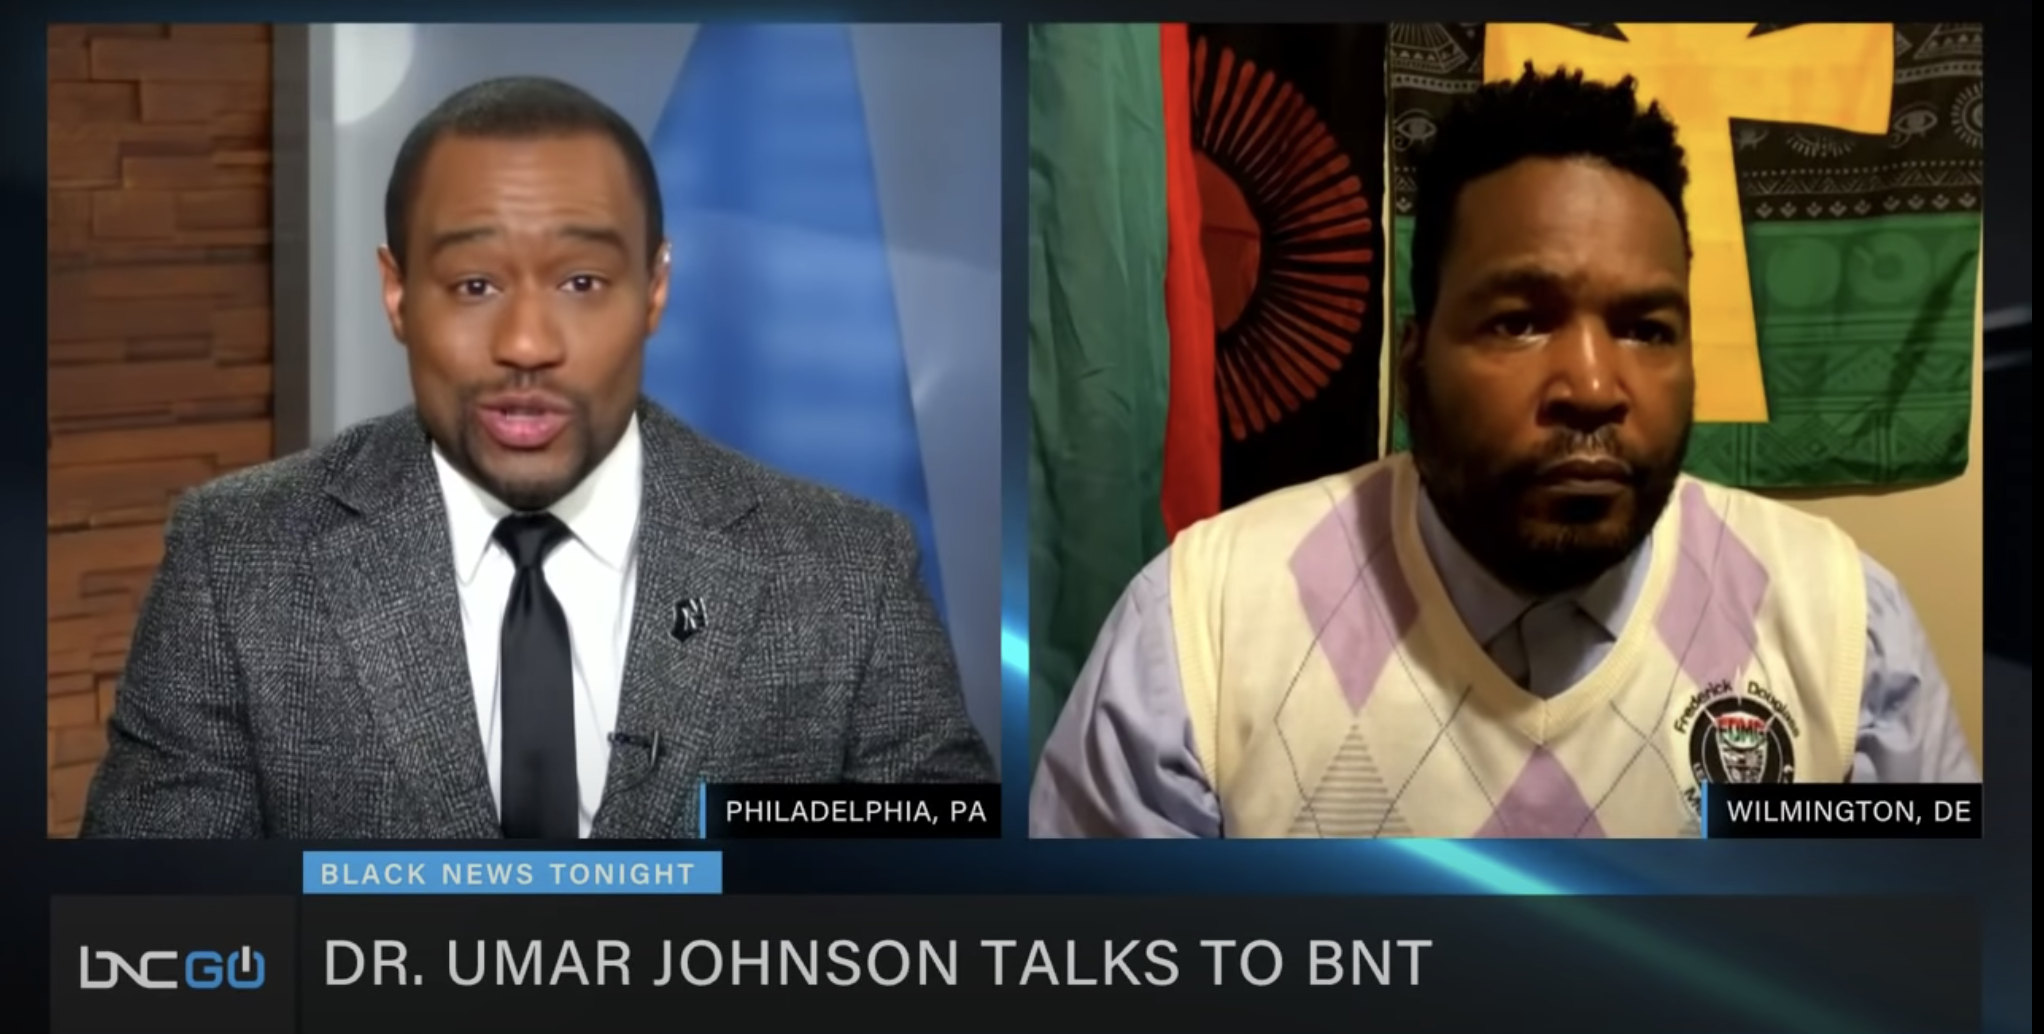 Marc Lamont Hill interviews Dr. Umar Johnson